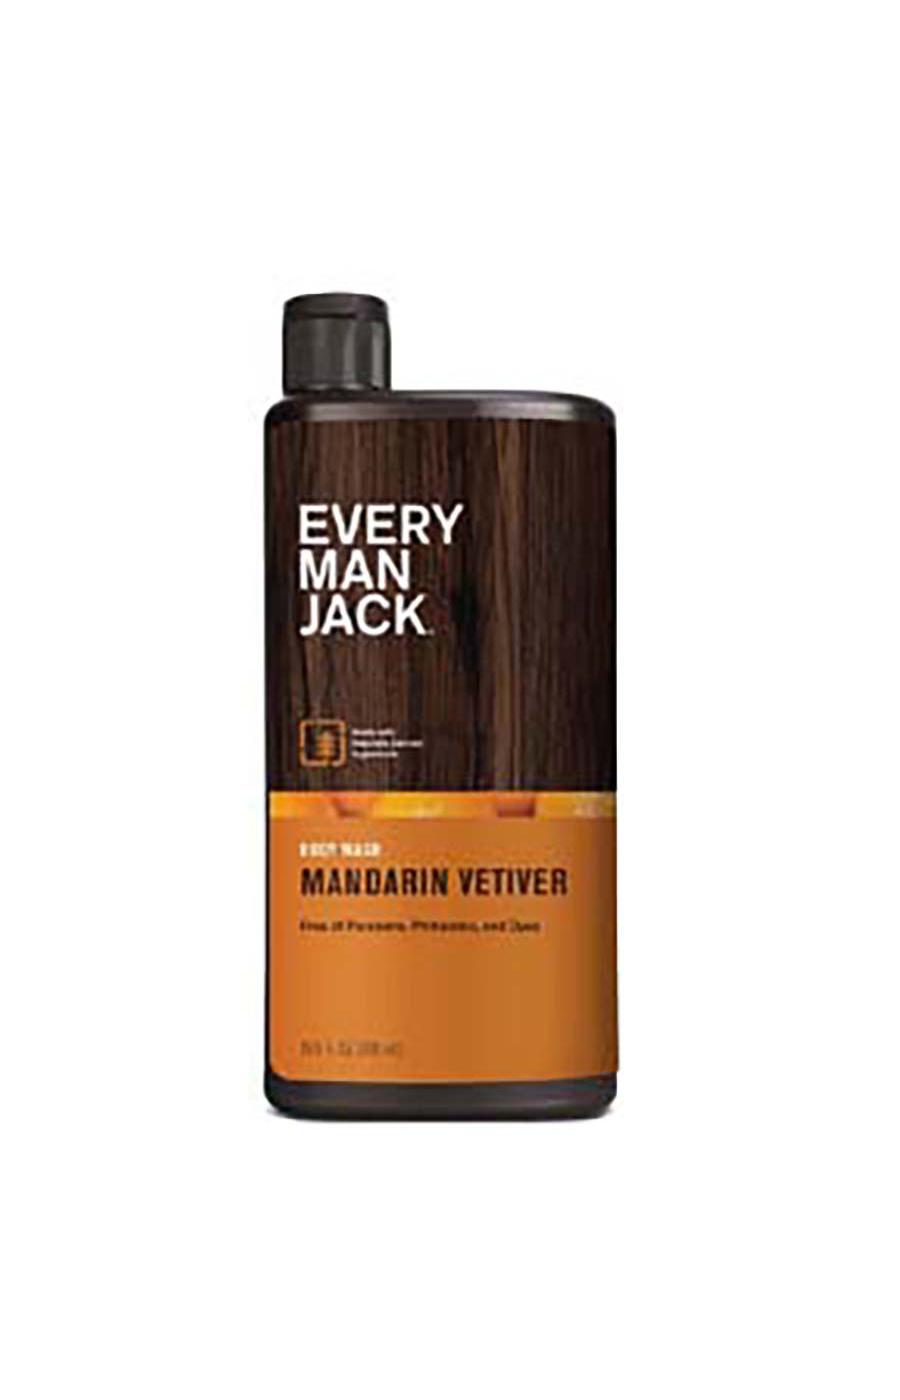 Every Man Jack Body Wash - Mandarin Vetiver; image 1 of 2